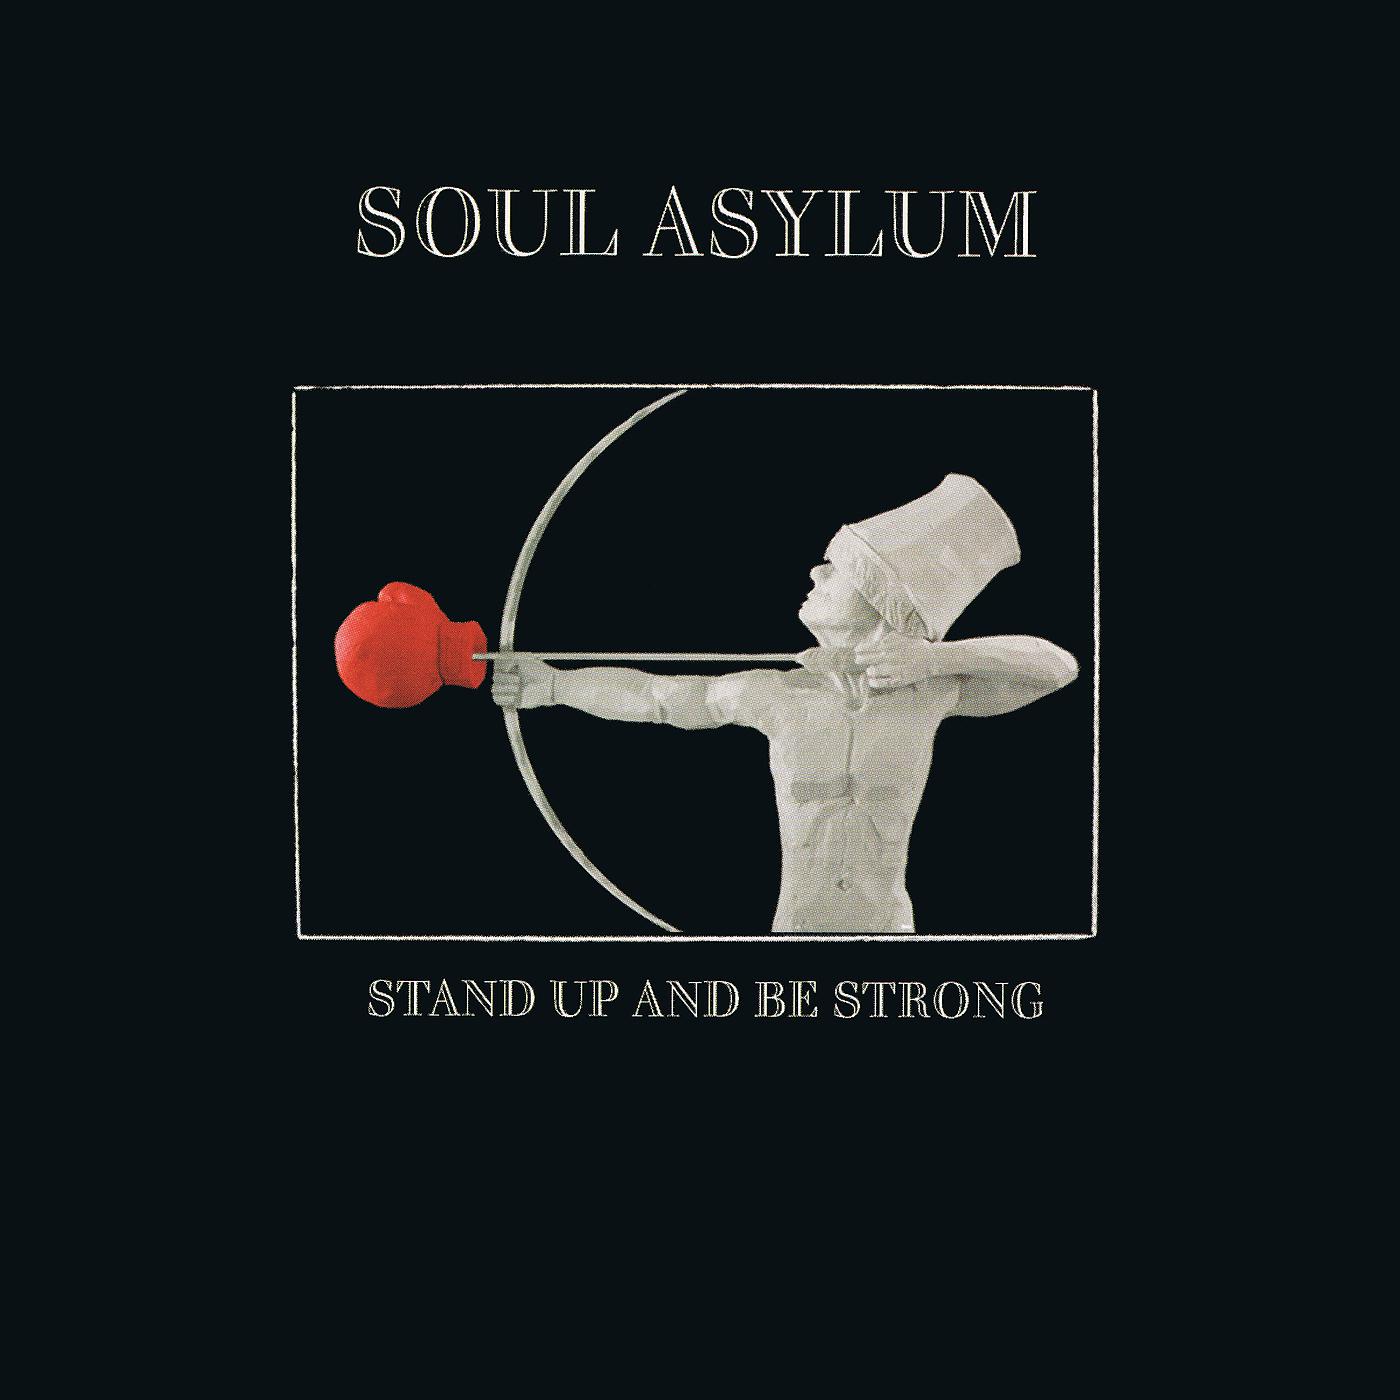 Soul Asylum обложки. Soul Asylum обложка альбомов. Soul Asylum песни. Альбом трека success. Strong soul